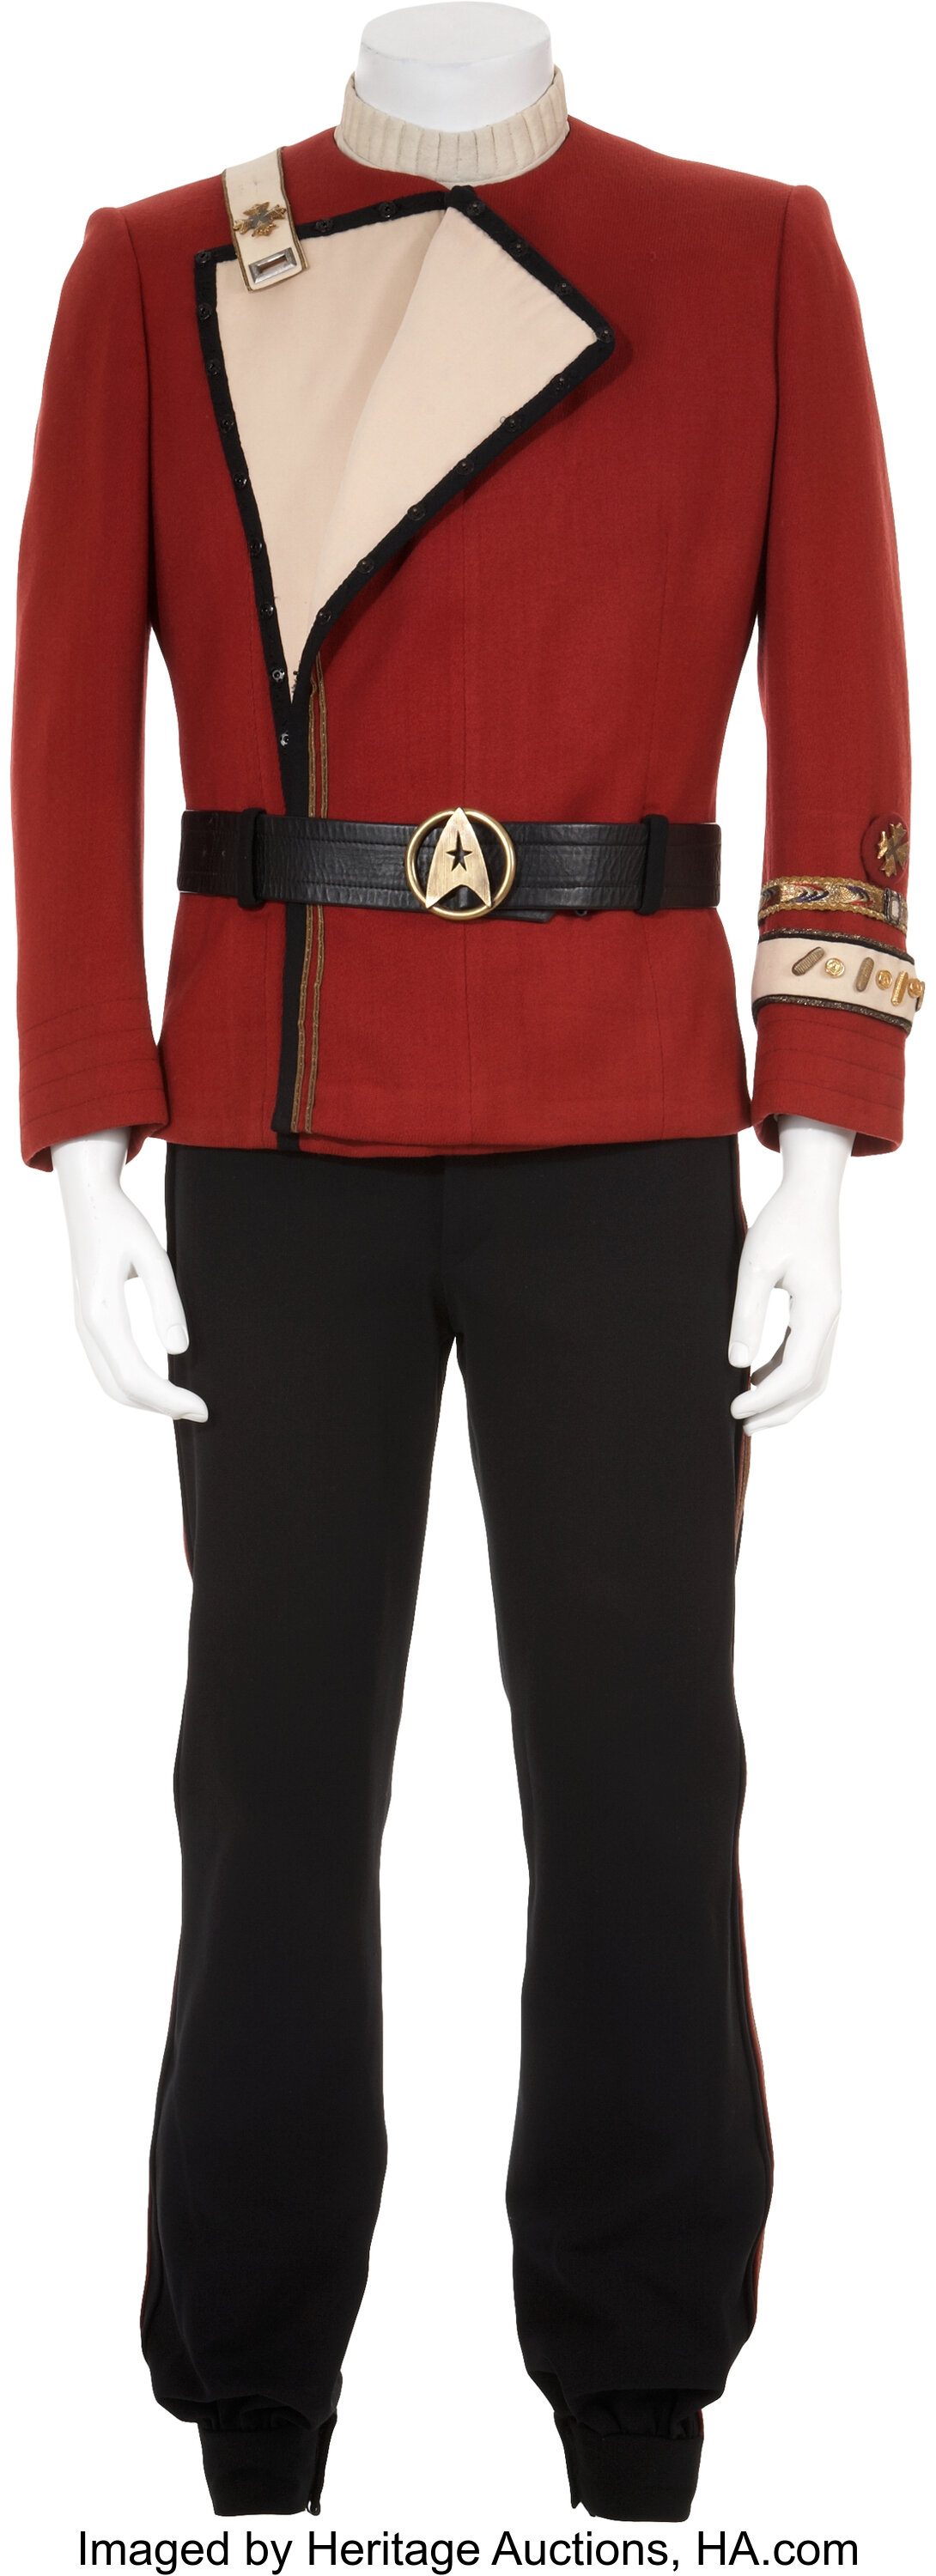 new star trek costumes for sale